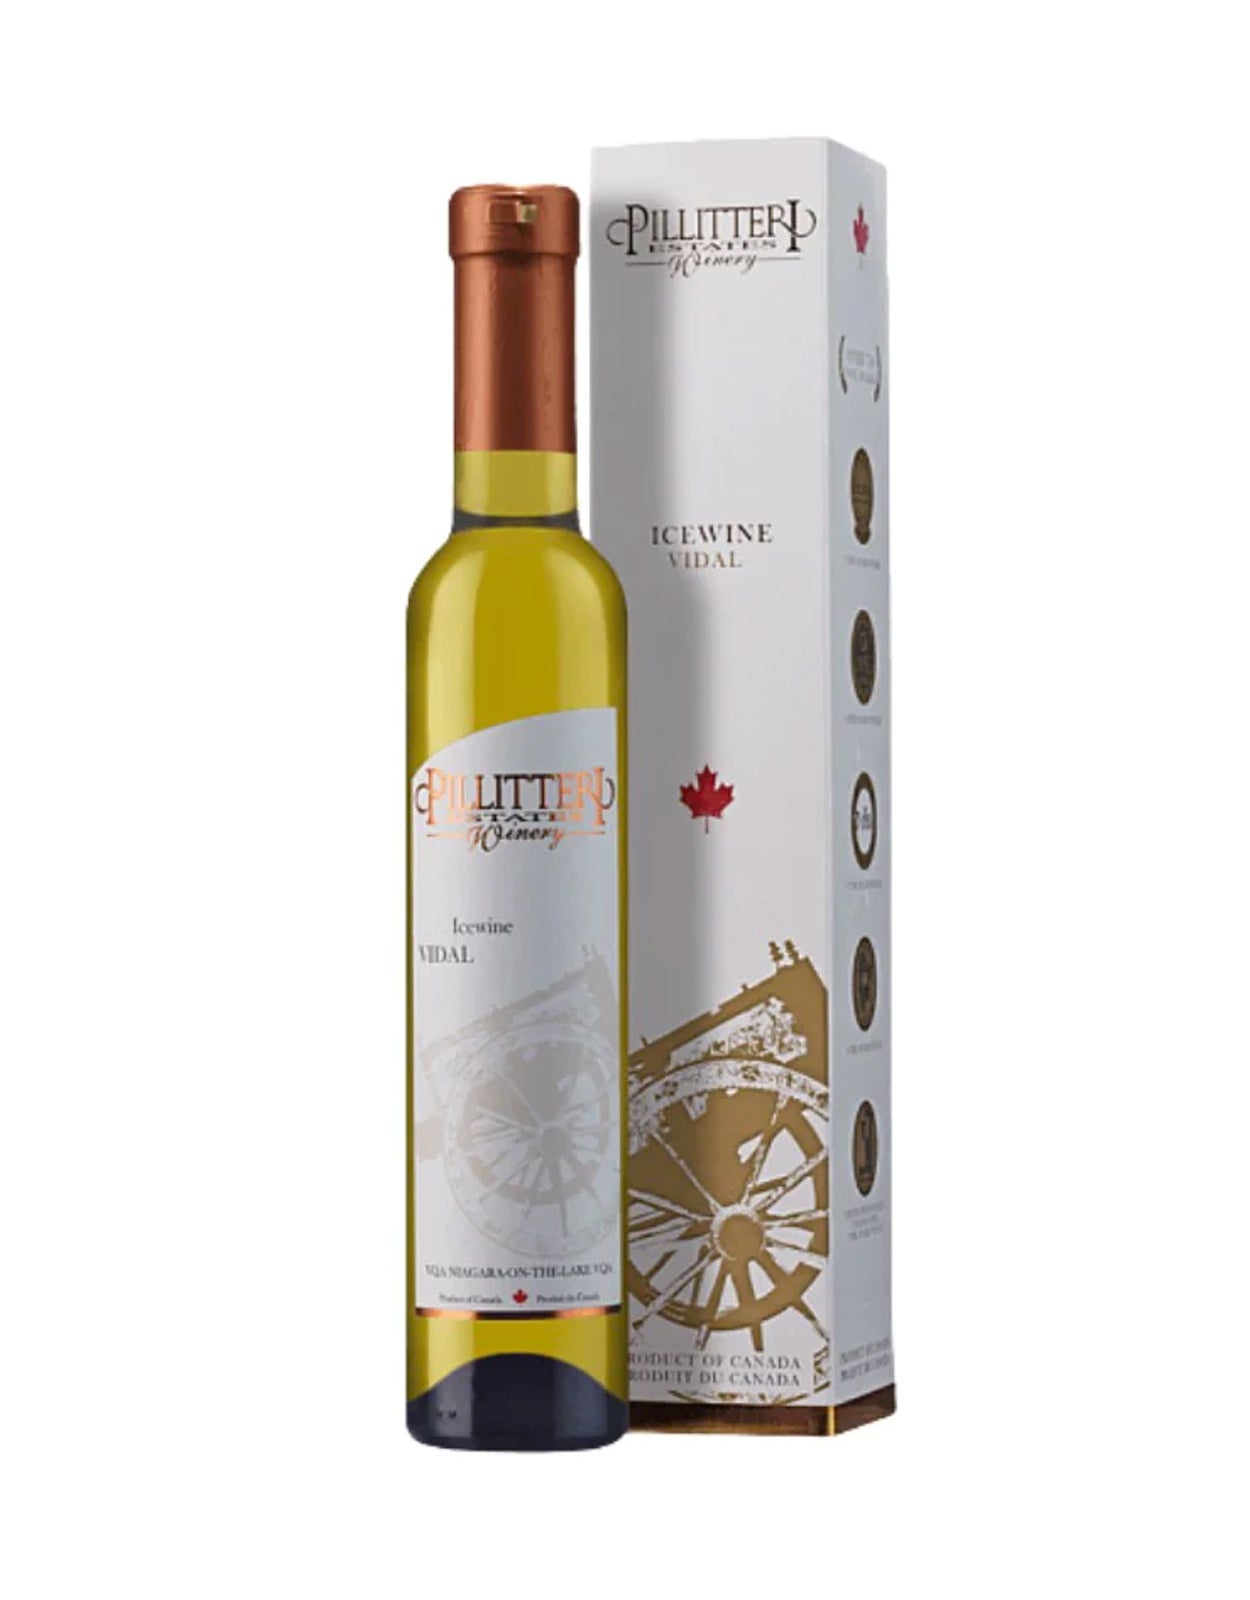 Pillitteri Estates Vidal Ice Wine Reserve 2016 - 200 ml